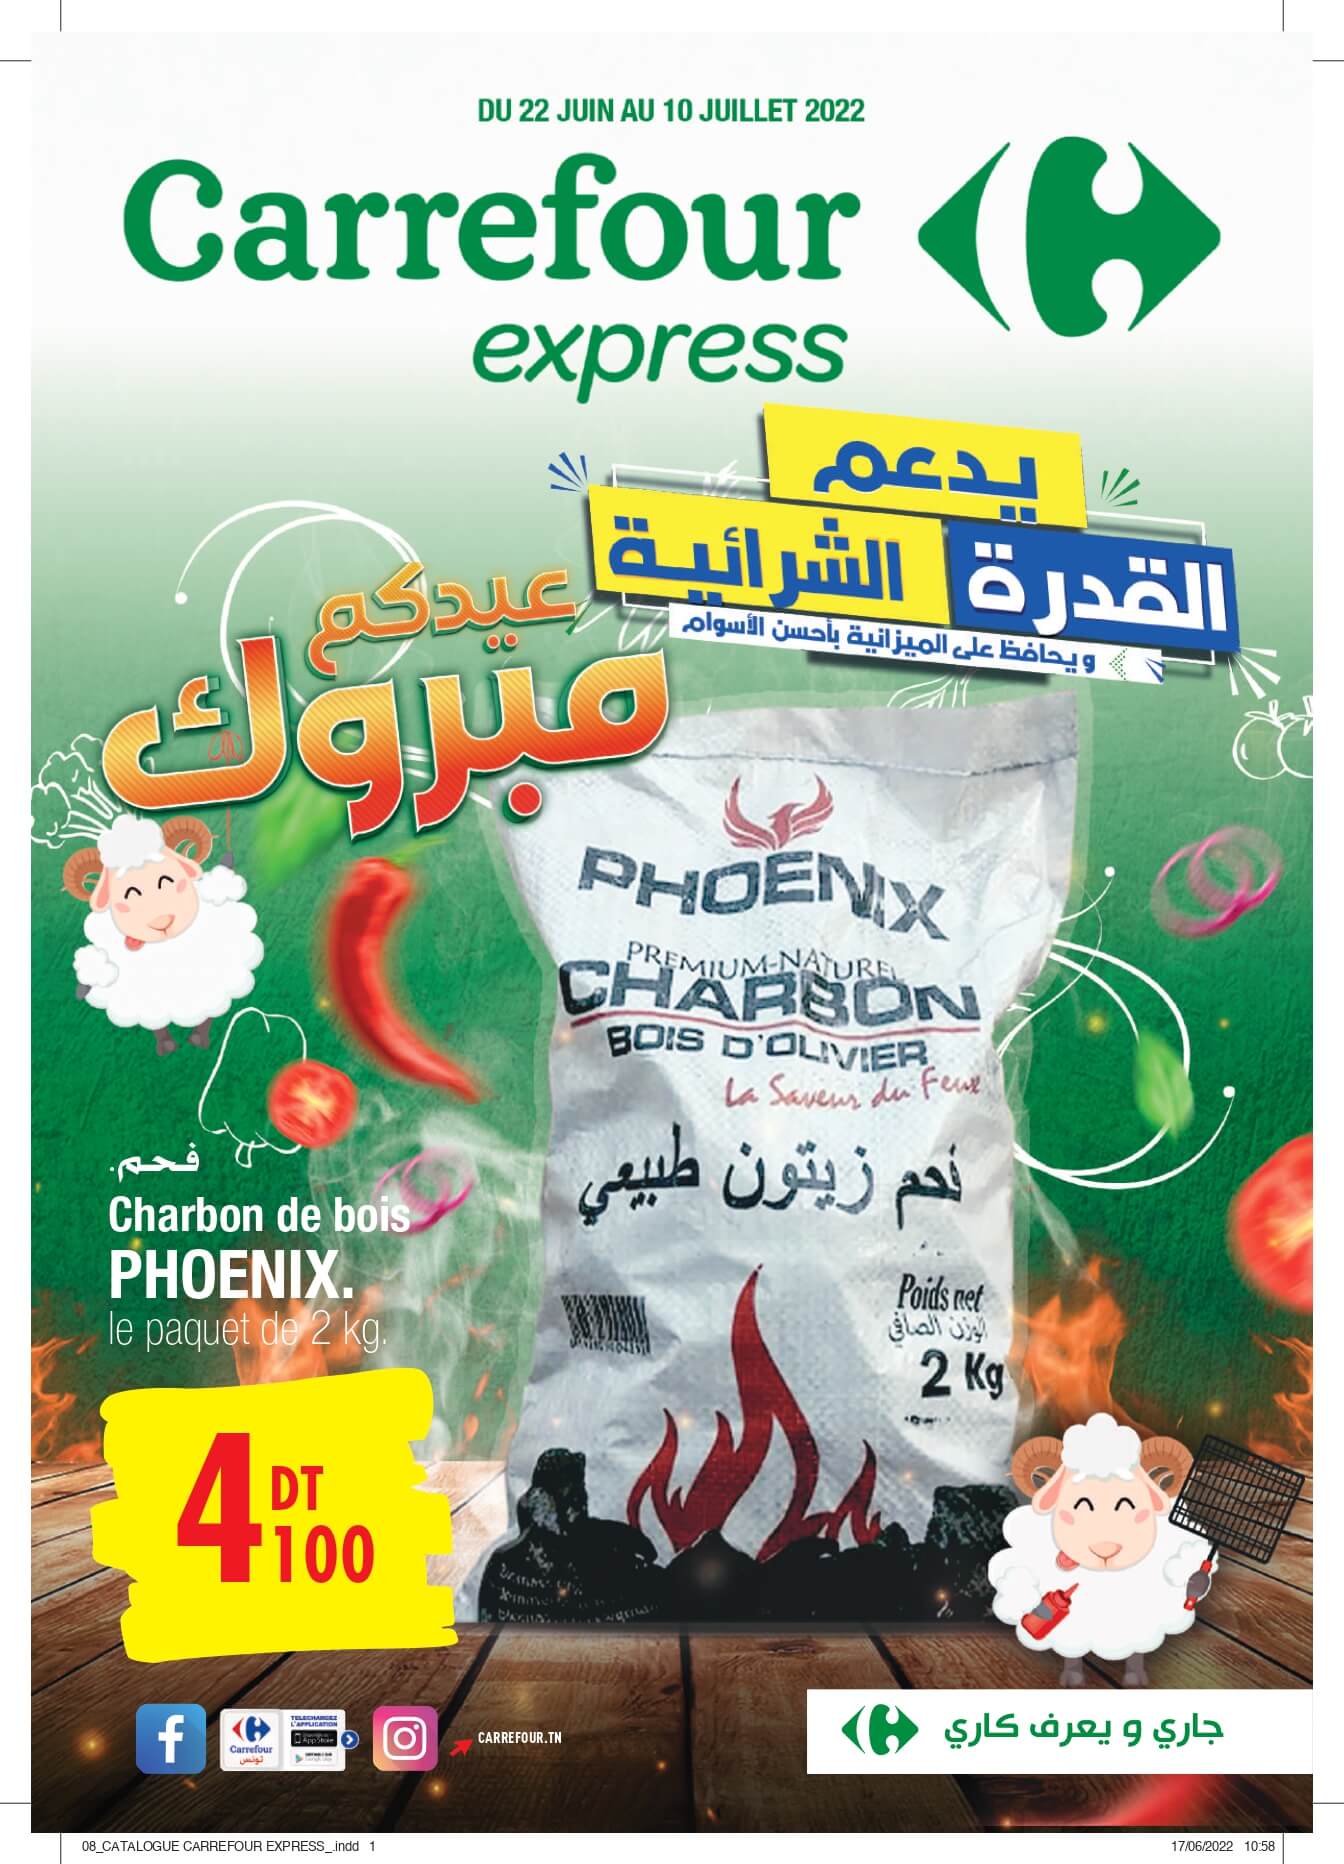 carrefour-express-aid-al-idhha